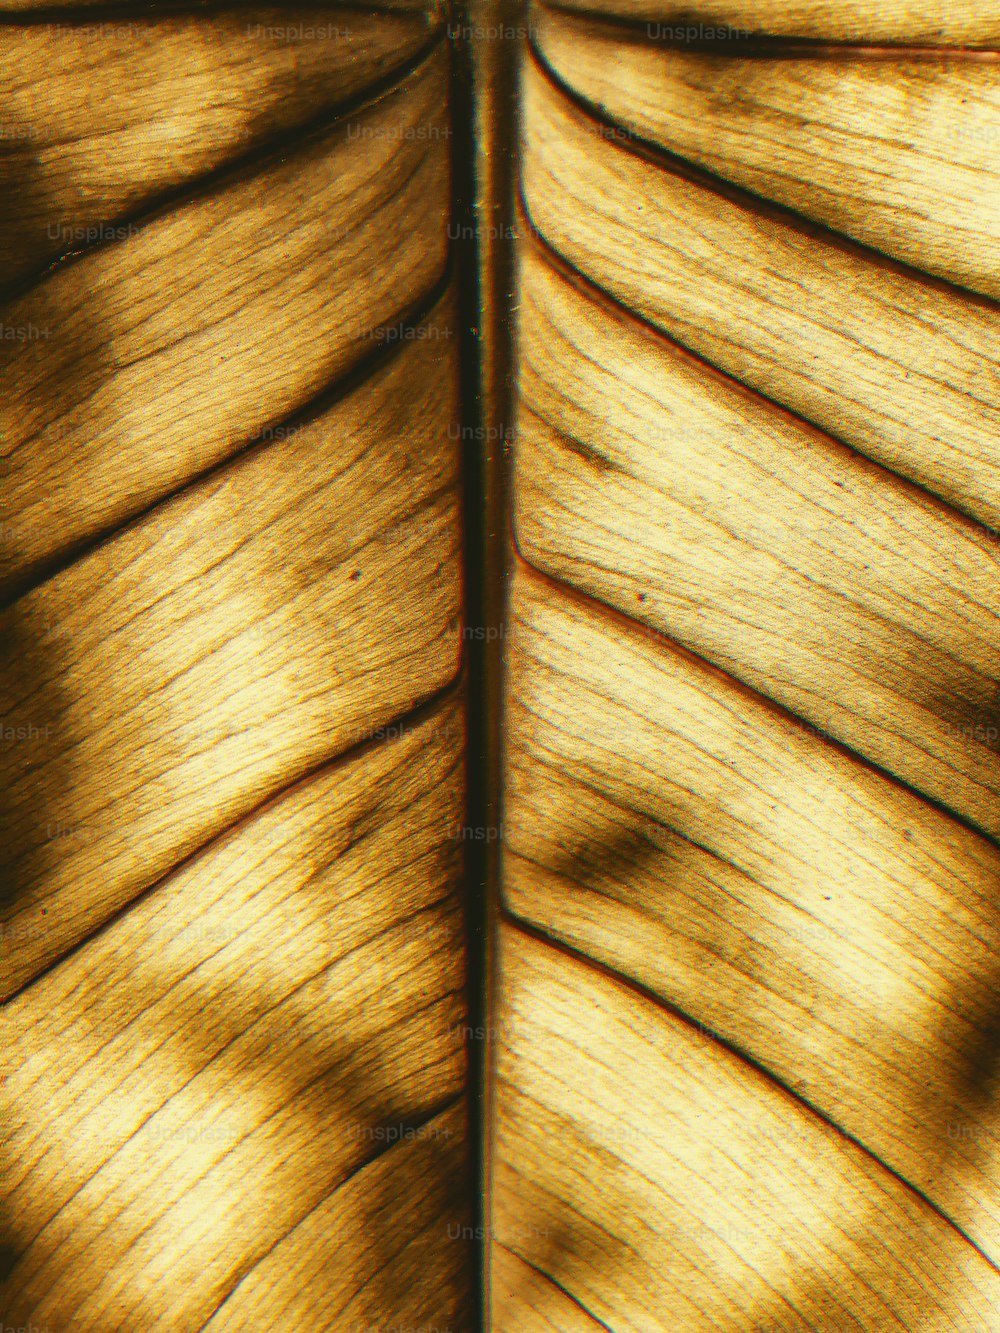 Gold Leaf Texture Pictures  Download Free Images on Unsplash